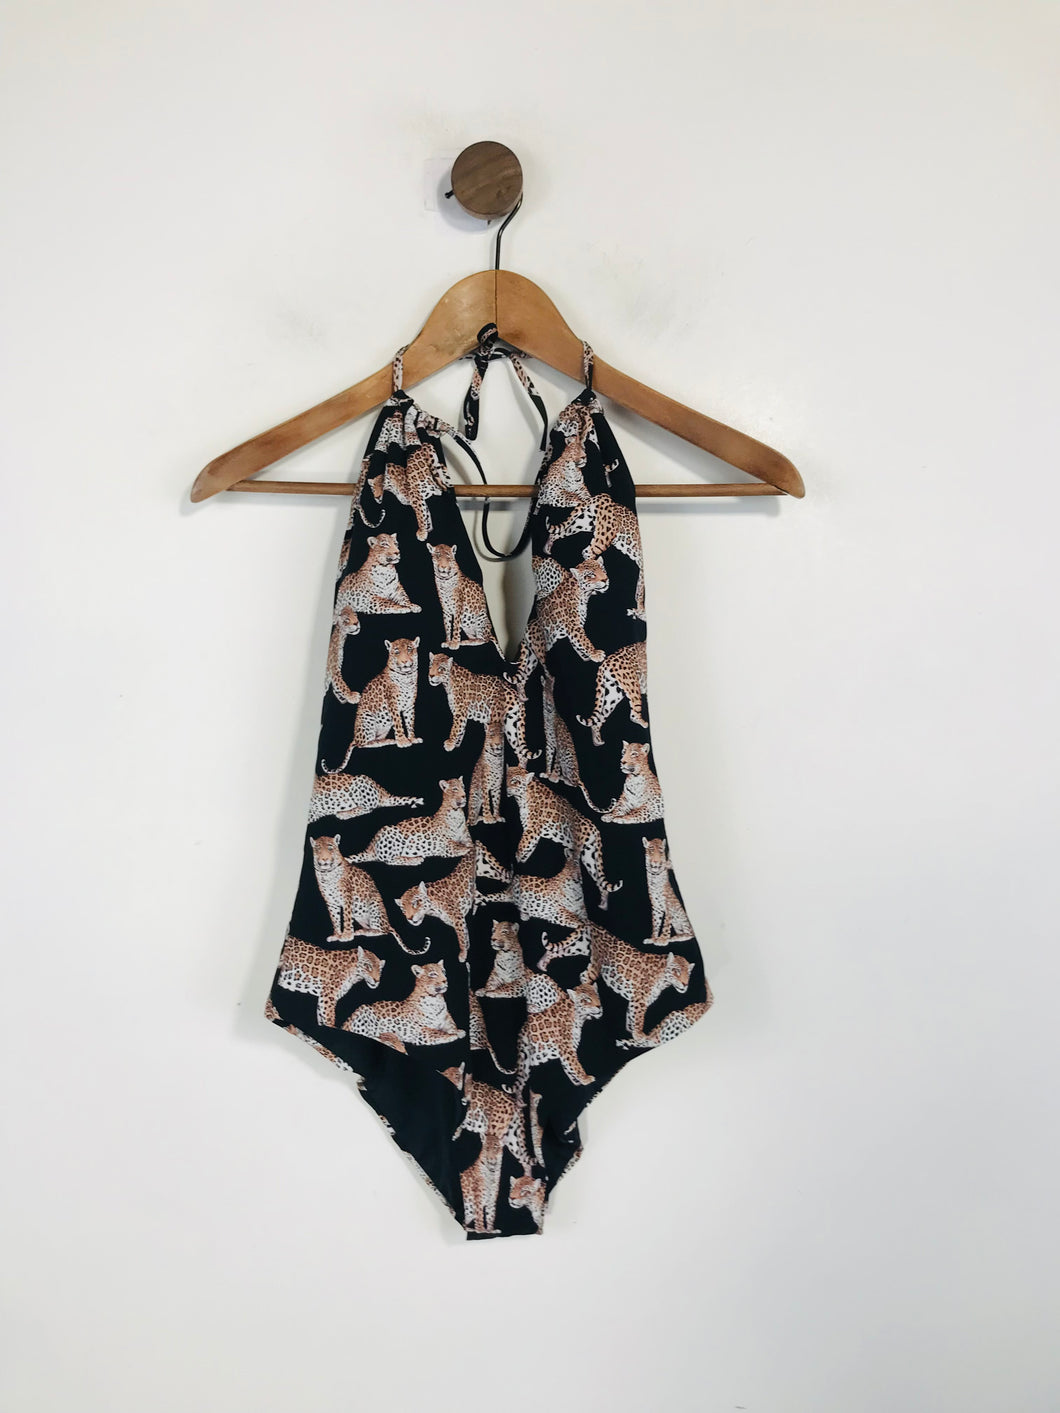 Calzedonia Women's Leopard Print One Piece Swimming Costume Sports Top | L UK14 | Black